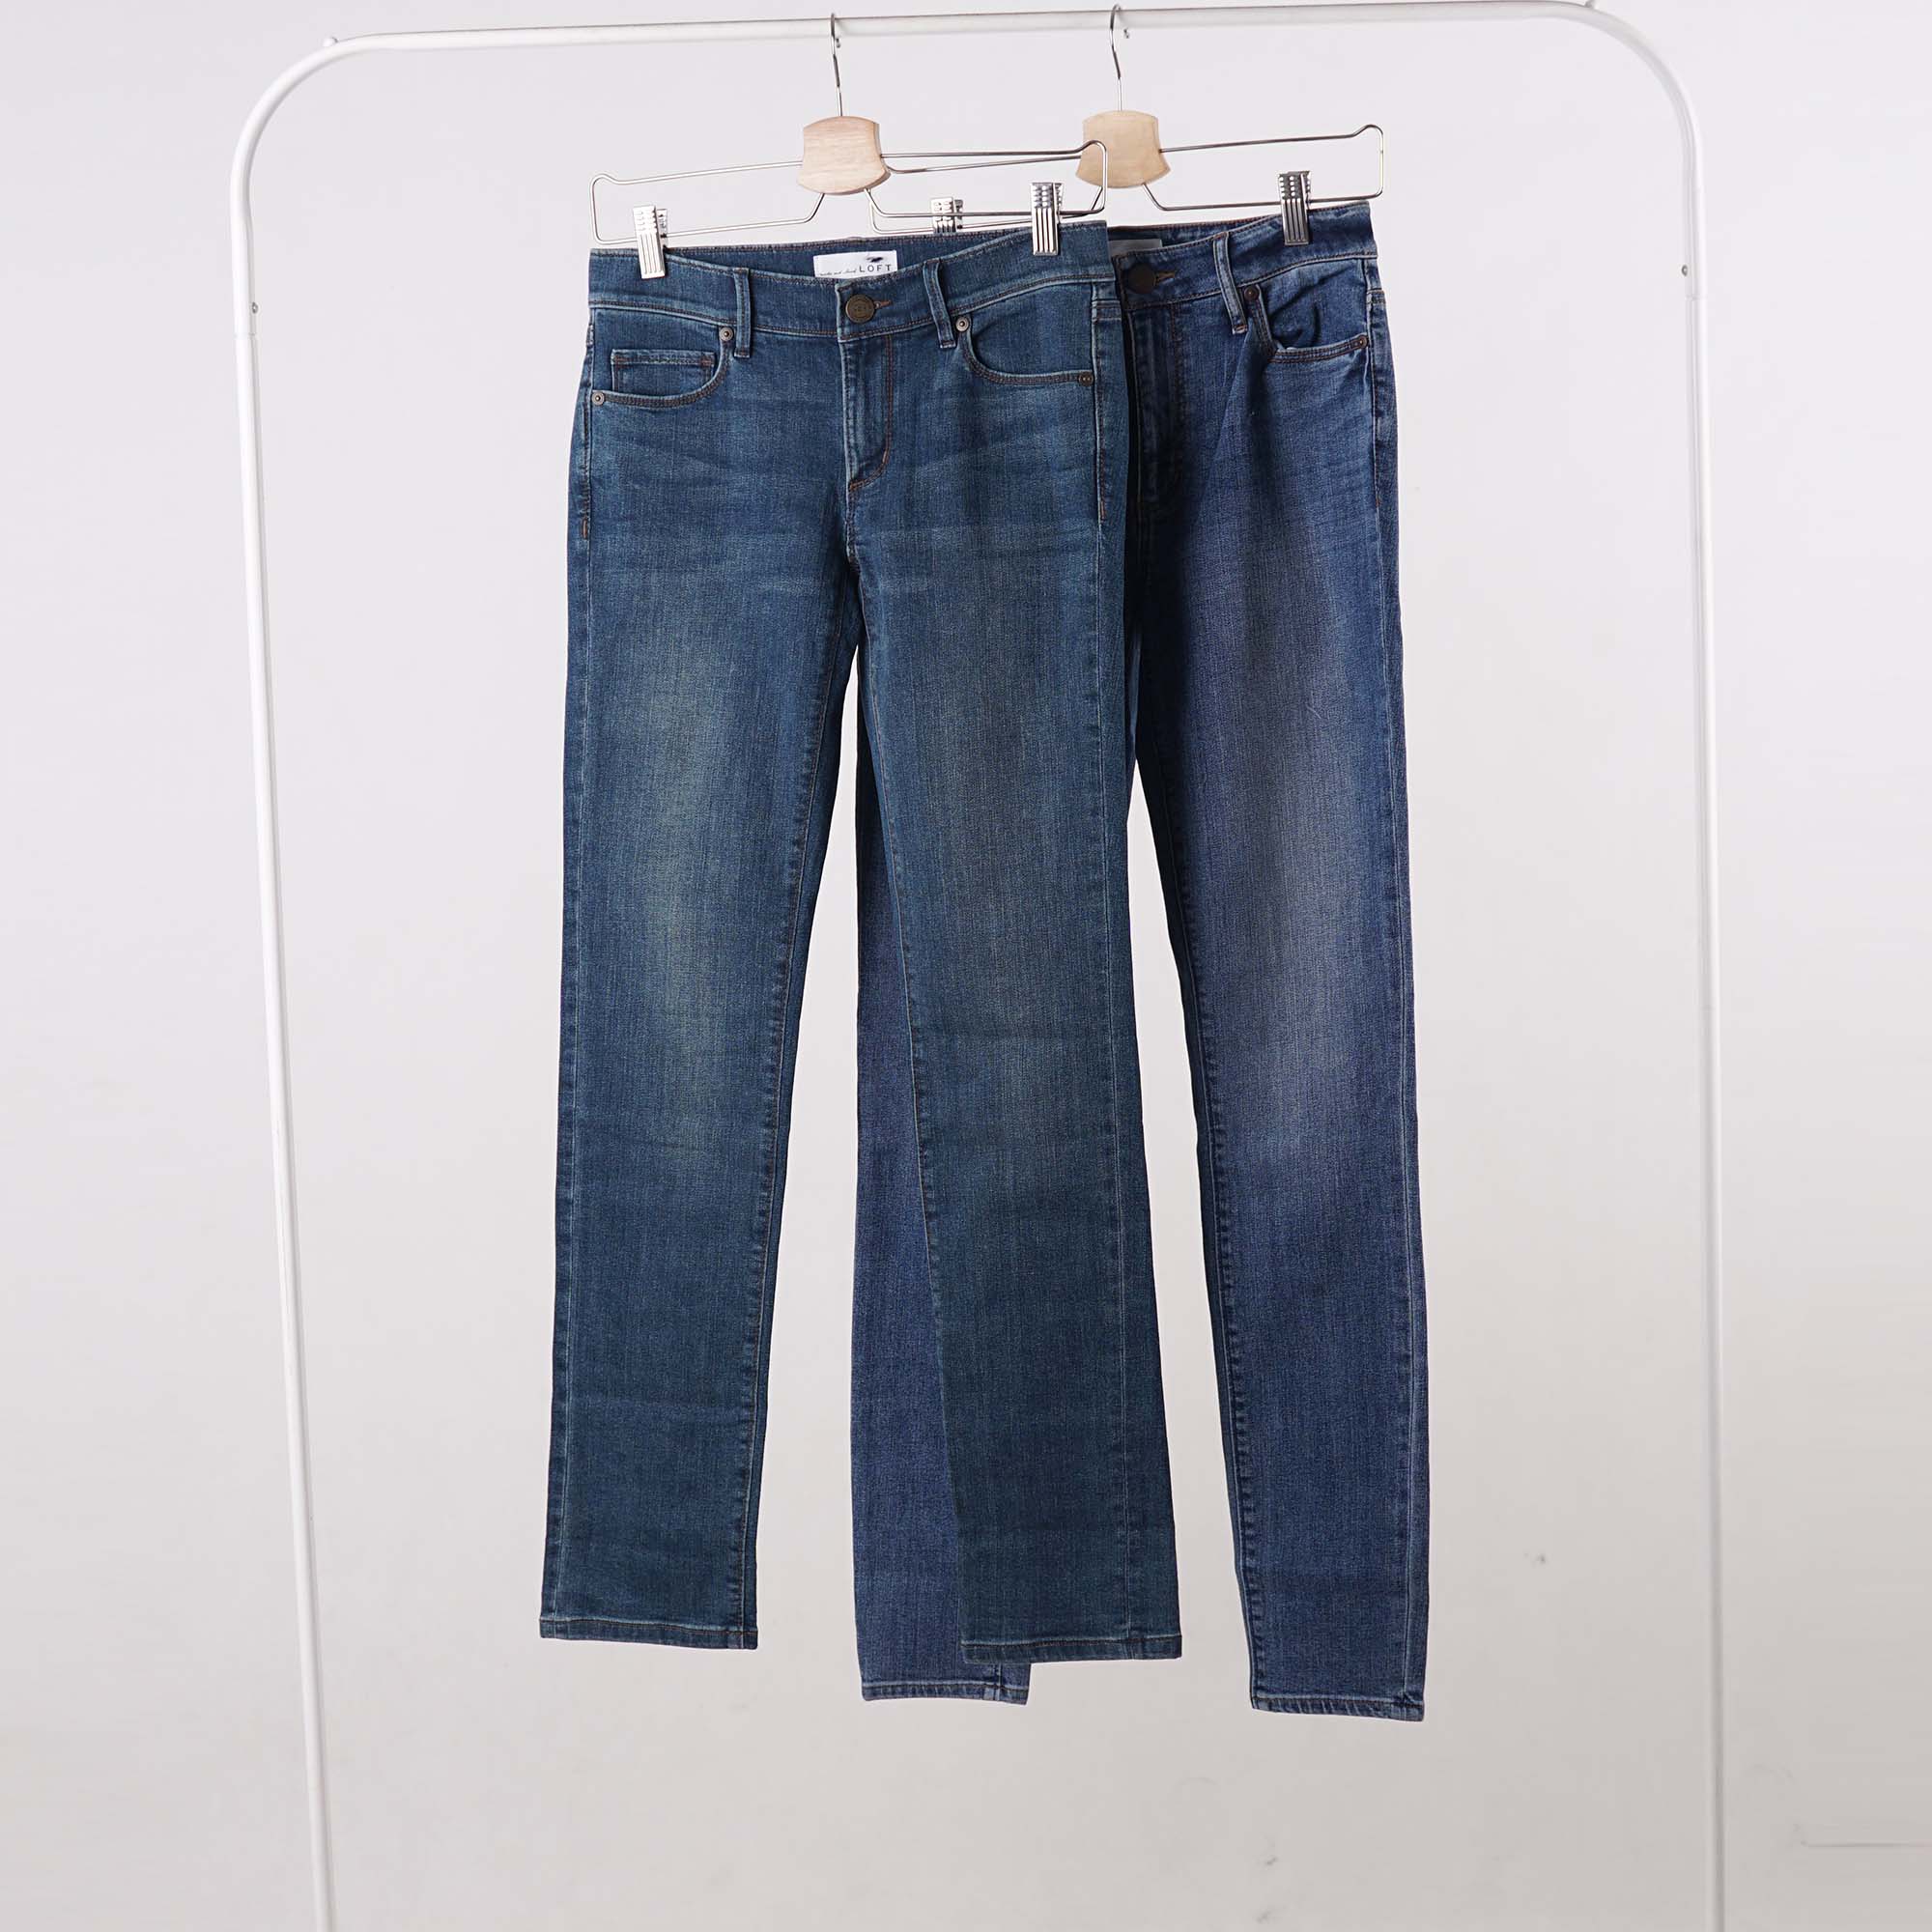 Celana Jeans Wanita - Curvy High Waist Skinny Ankle Jeans Pant (MLL 116 , MLL 54)